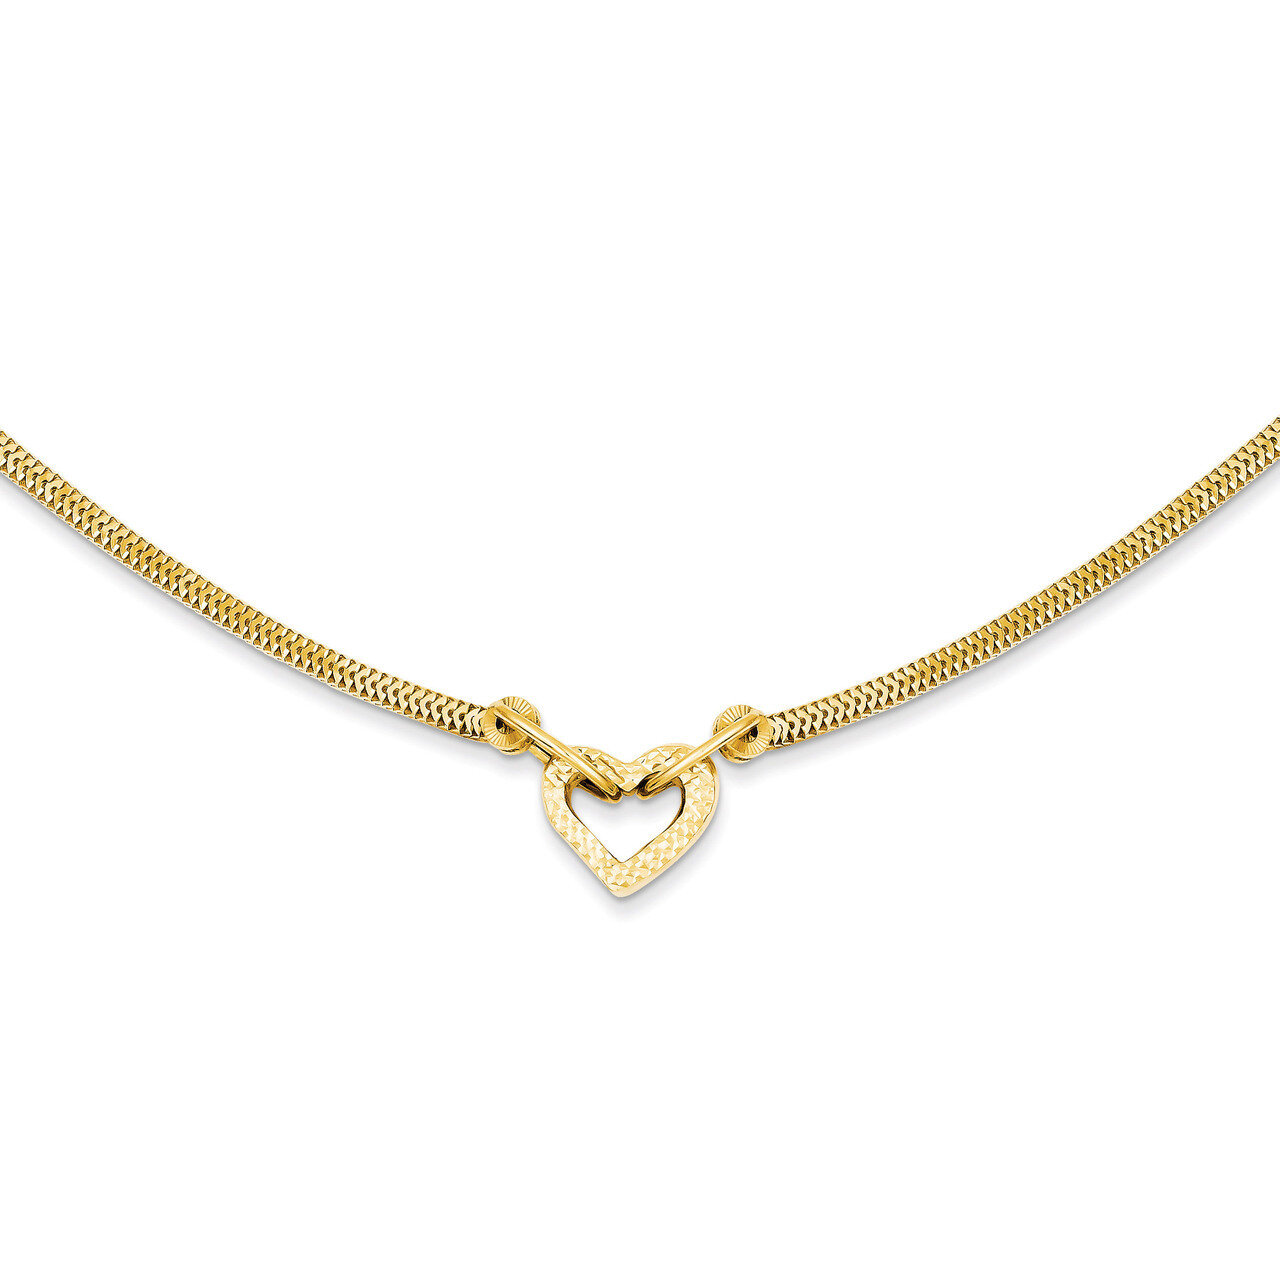 Fancy Franco Diamond Cut Puff Heart 2in Ext Necklace 16 Inch 14k Gold SF2005-16